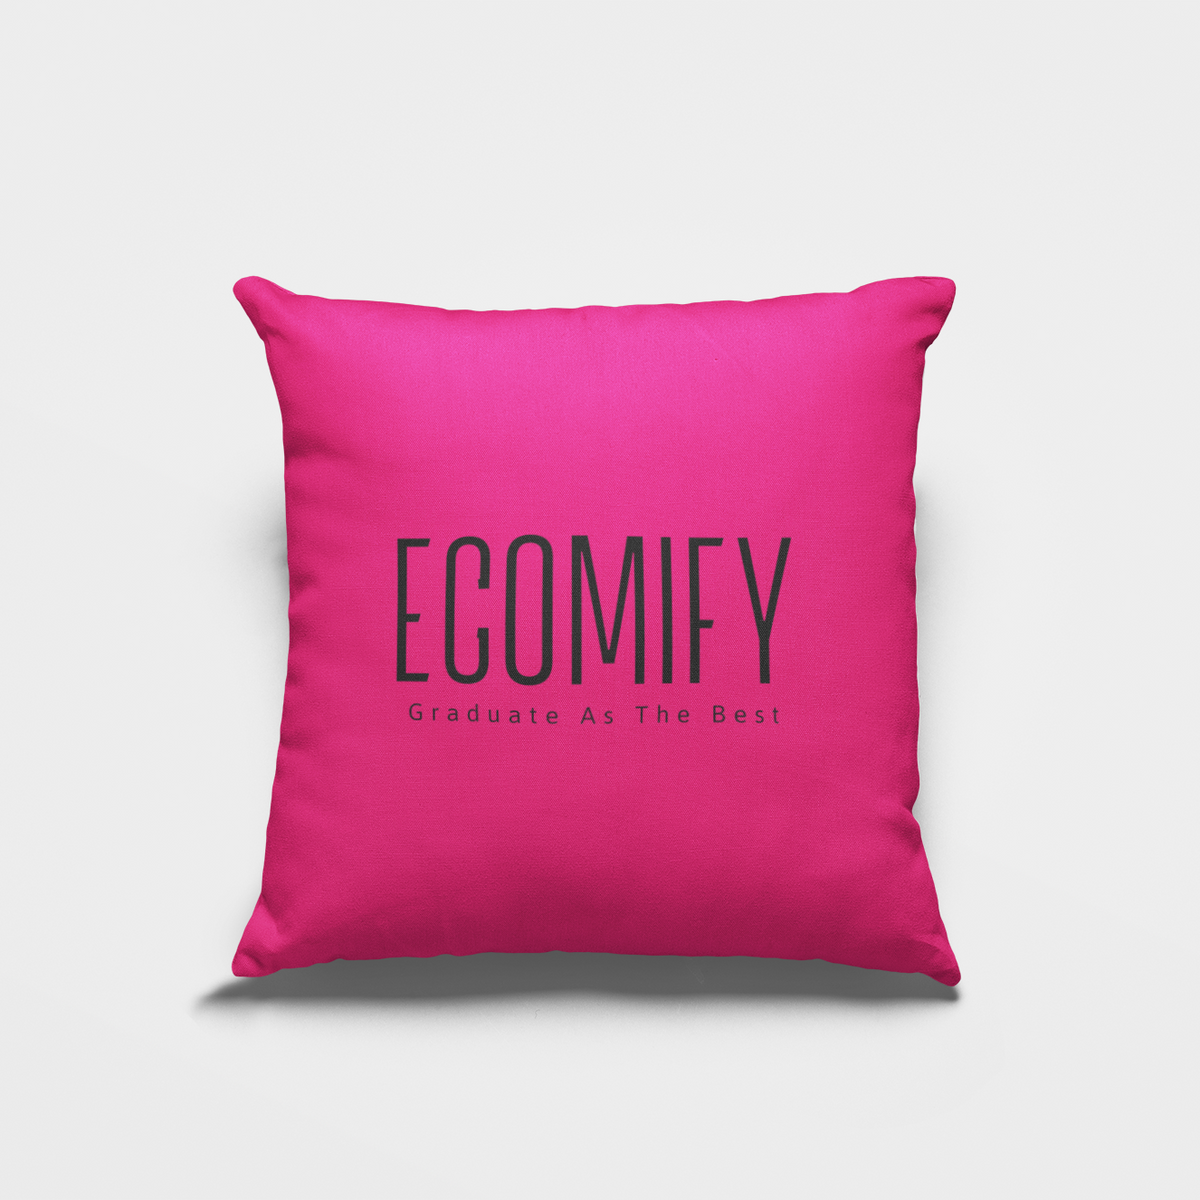 Ecomify® Pillow